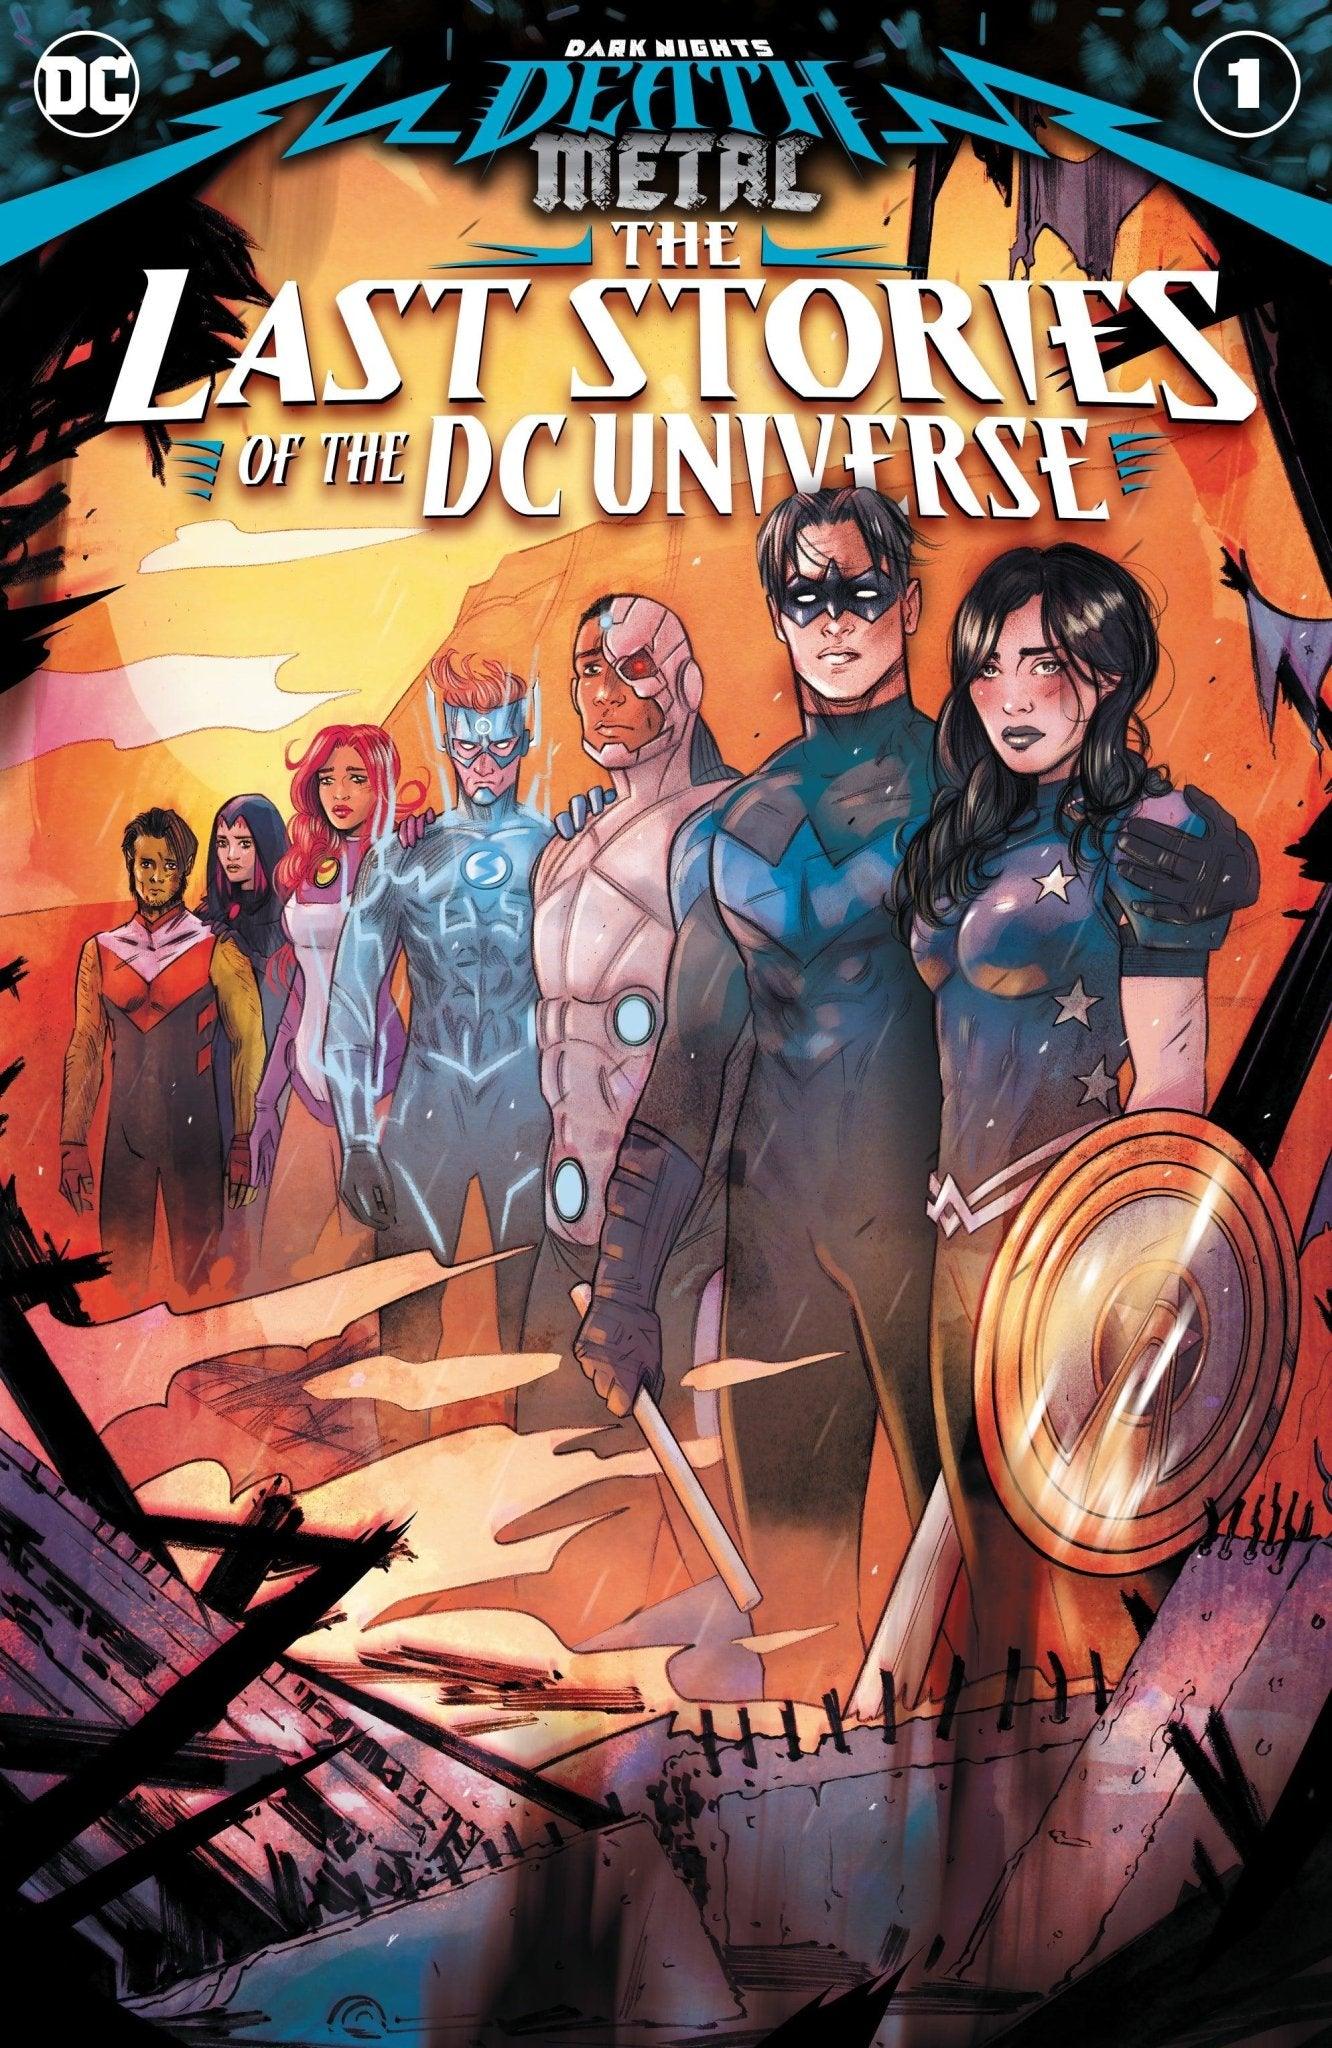 DARK NIGHTS DEATH METAL THE LAST STORIES OF THE DC UNIVERSE #1 (ONE SHOT) CVR A TULA LOTAY (SHIPS 12-08-20) - PCKComics.com